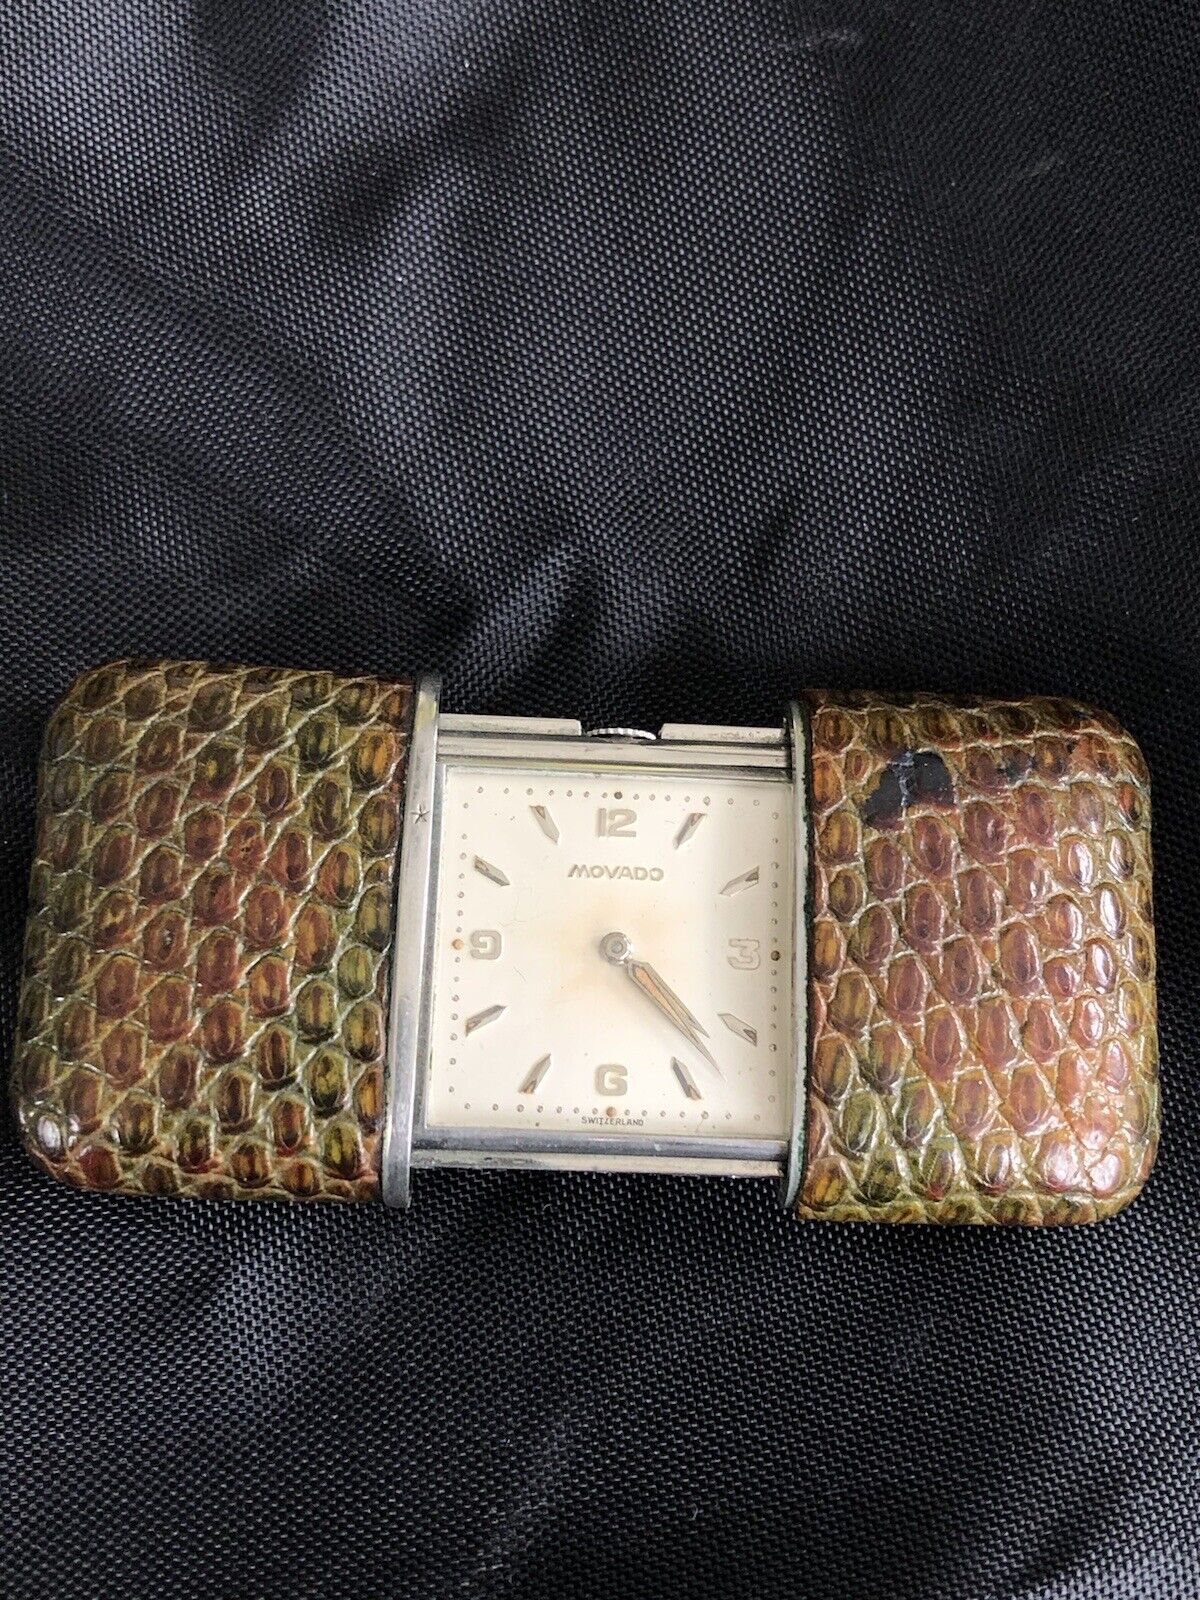 RARE Vintage MOVADO ERMETO Chronometer with Snake Skin C1930’s